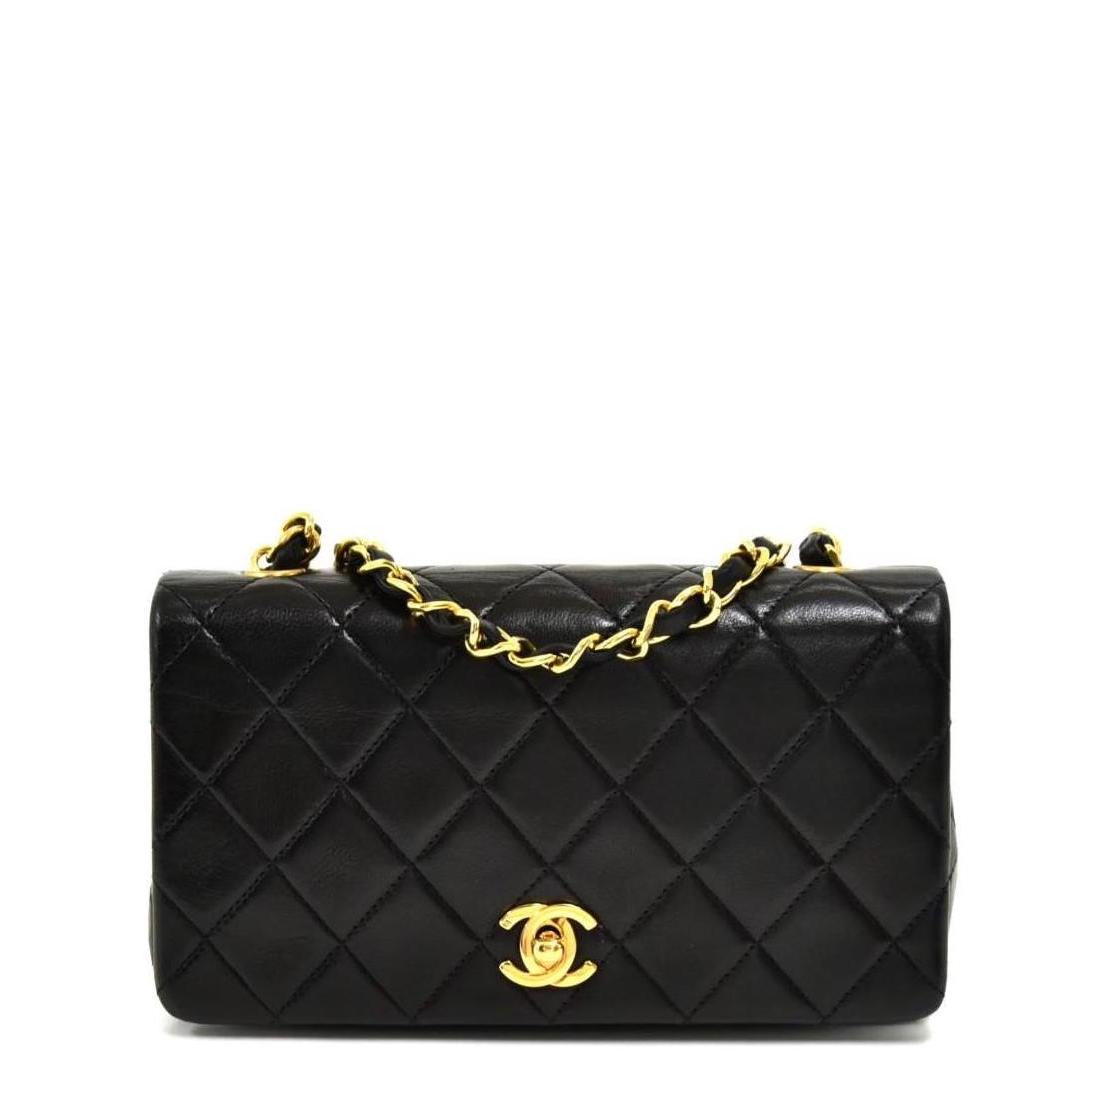 The Purse Outlet - Chanel medium flap dark brown shw #11 Rp 24jt | Facebook